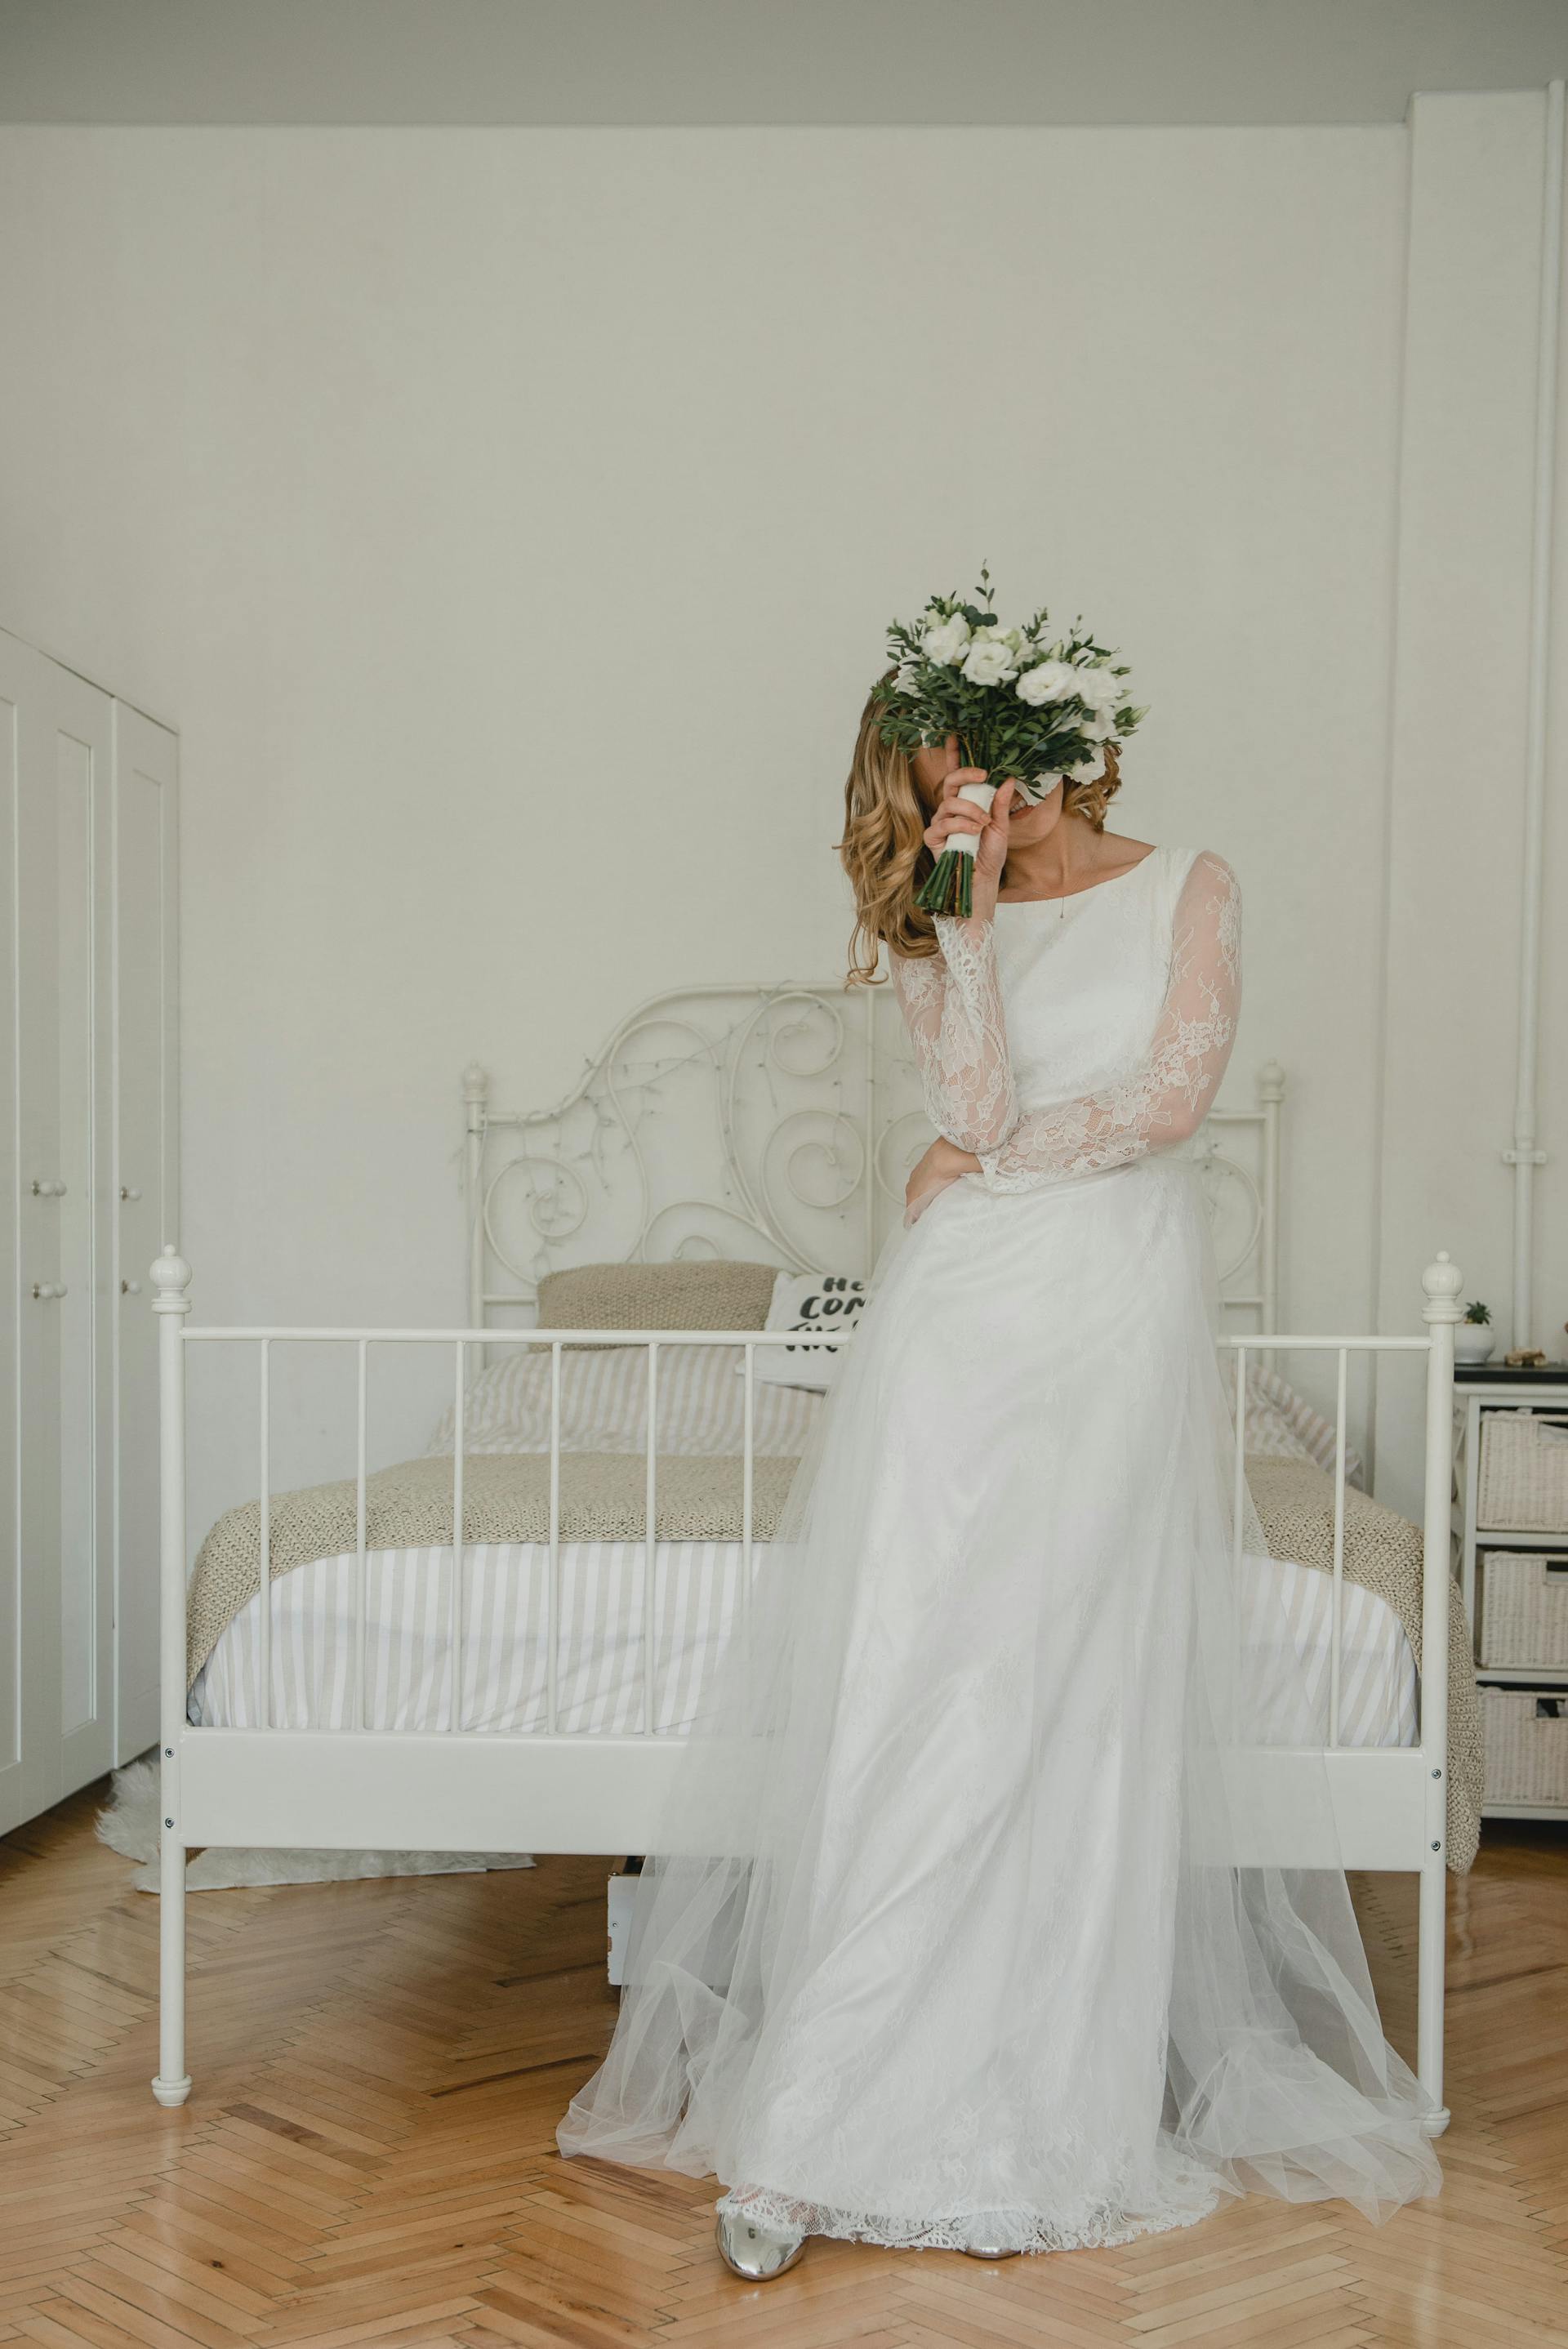 A bride in a dressing room | Source: Pexels